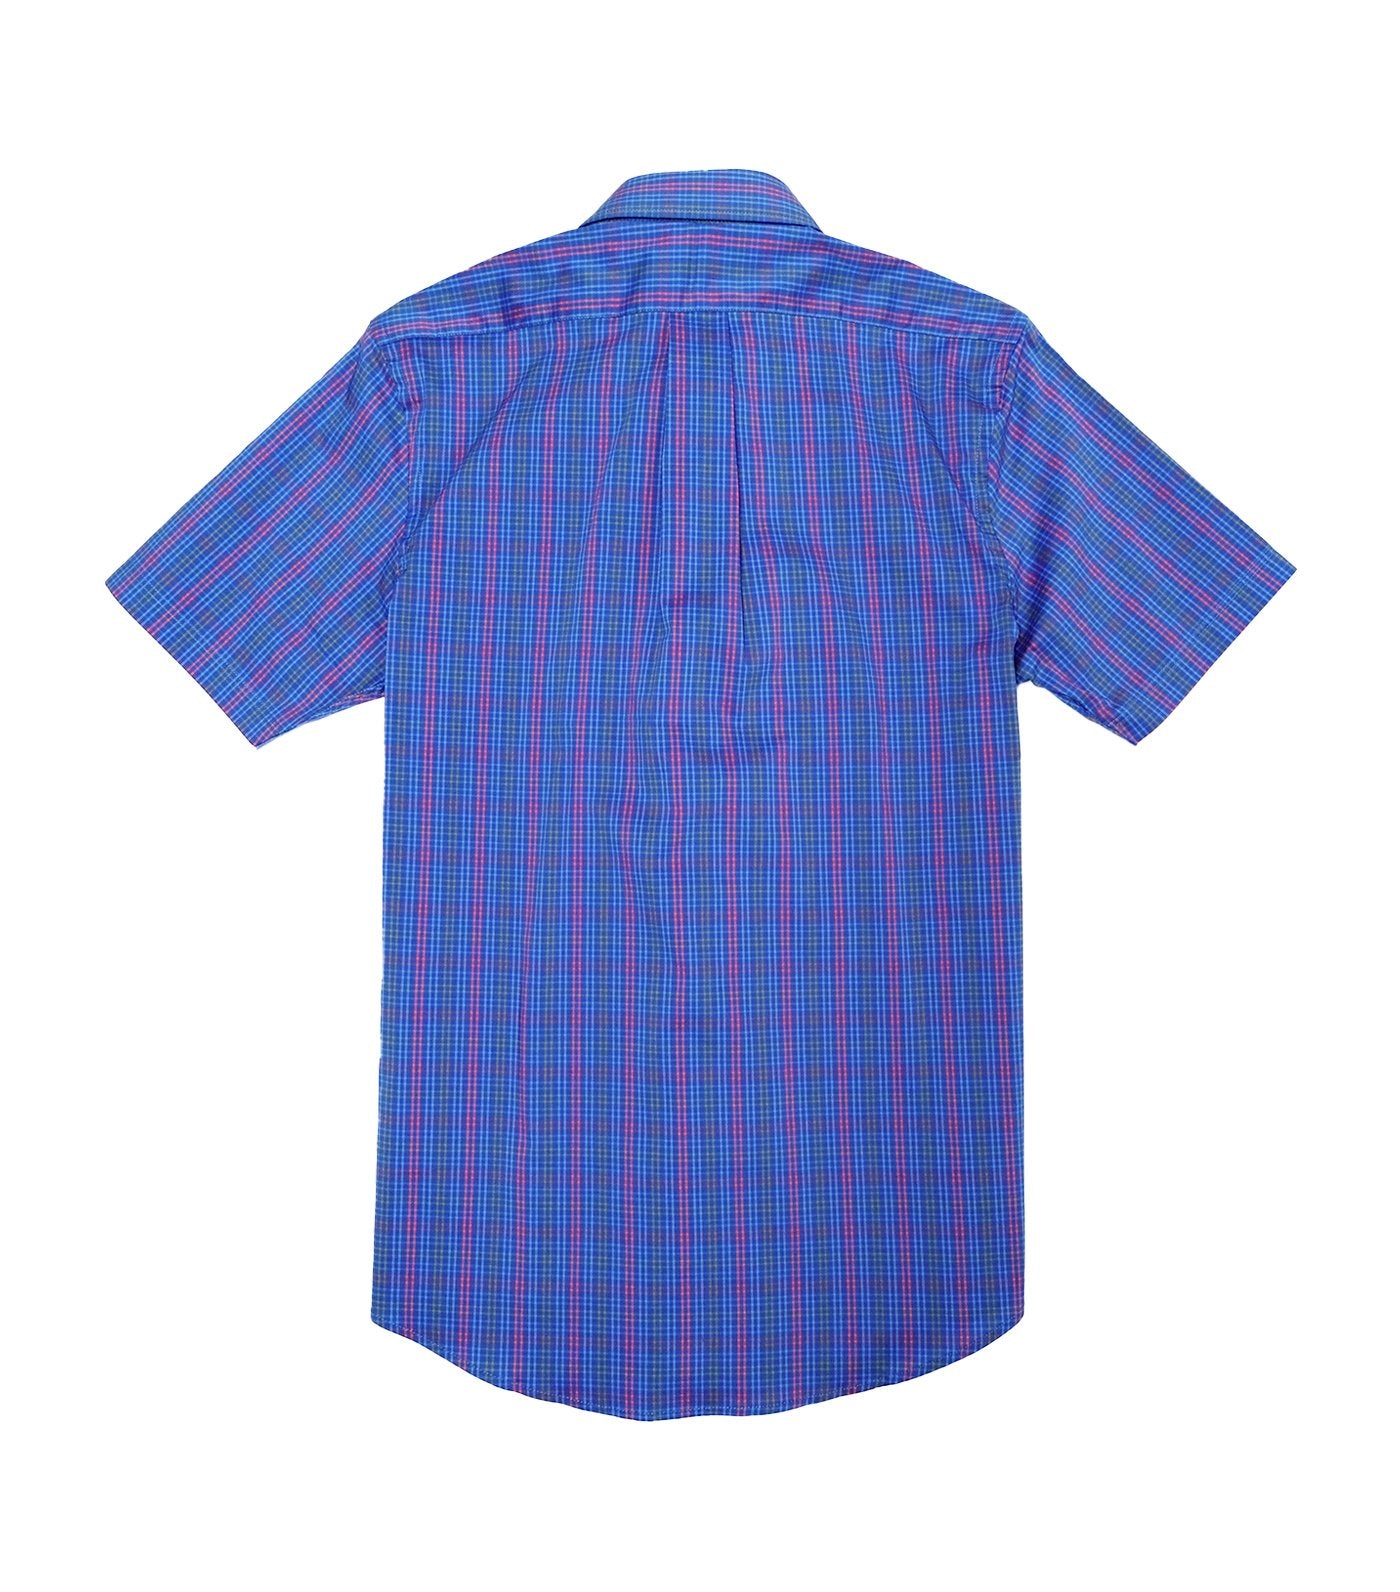 Jack Nicklaus Multi-Color Check Woven Shirt